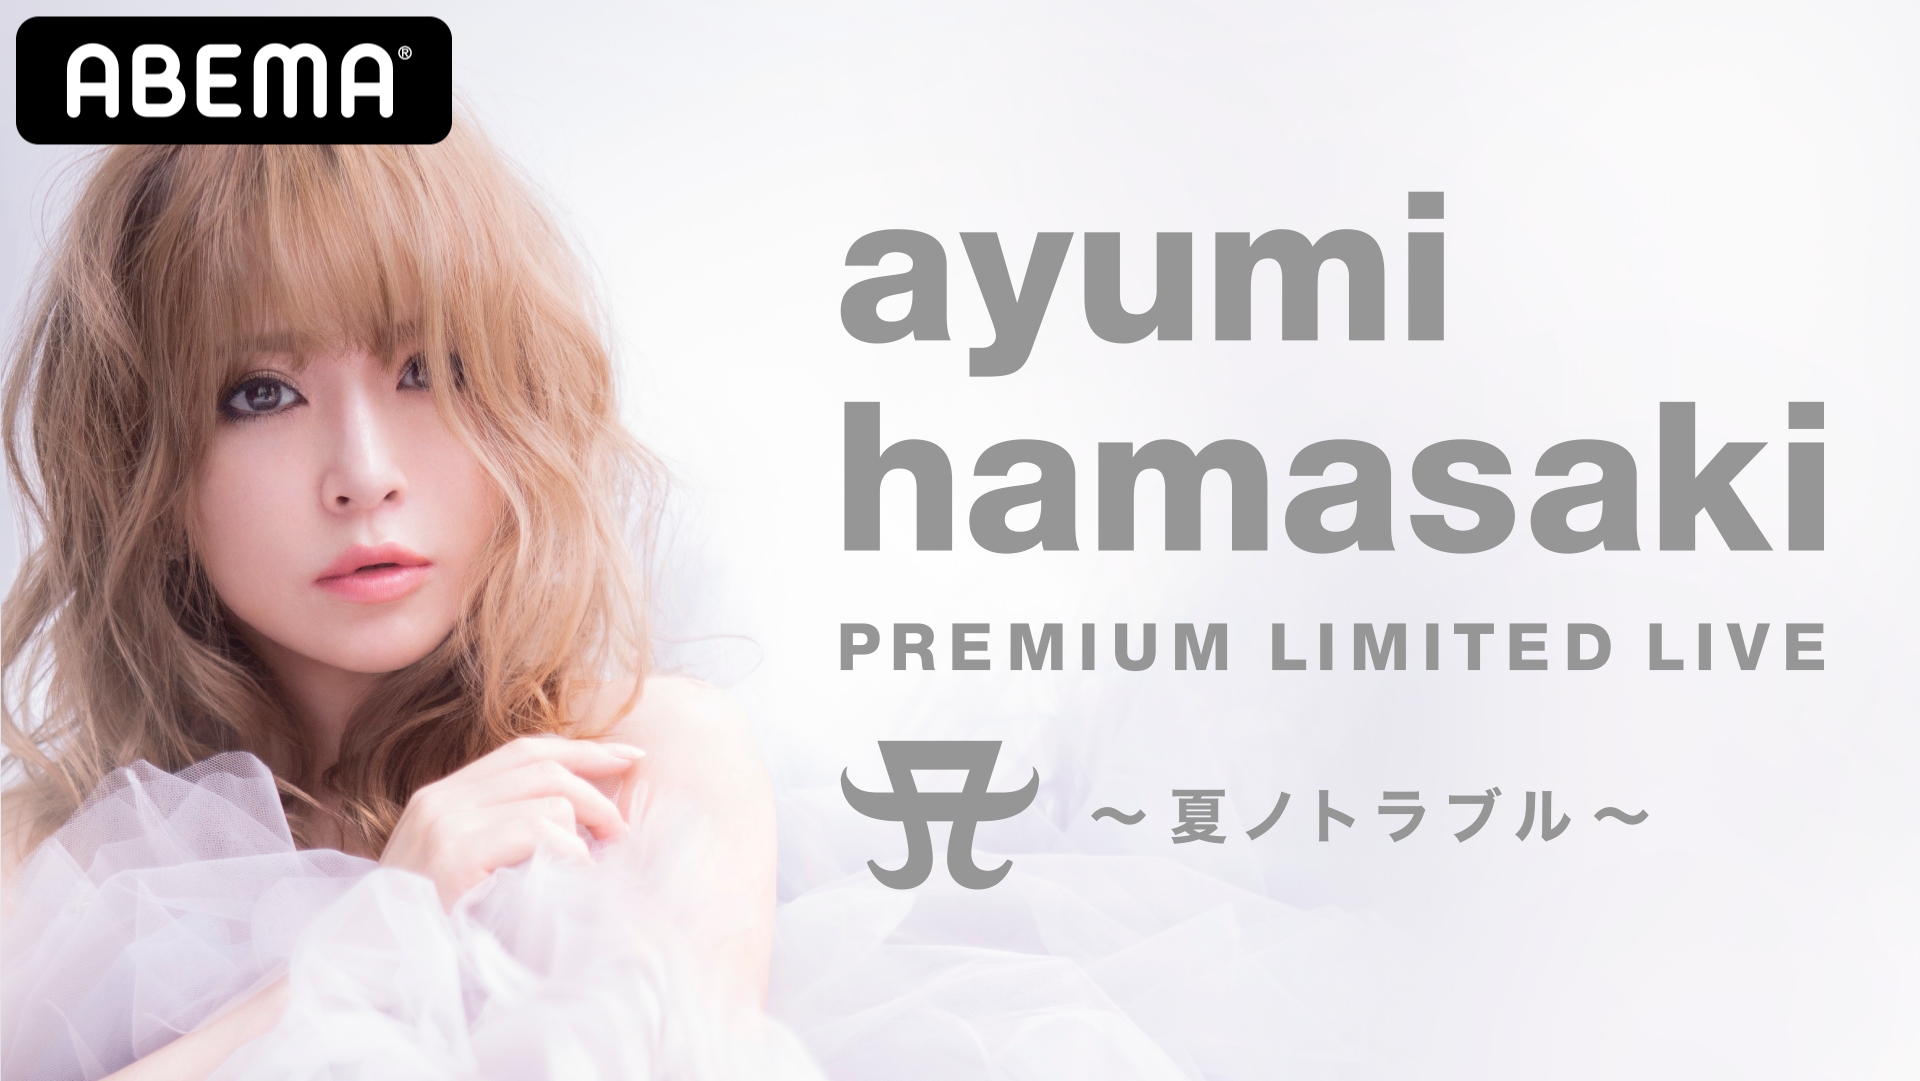 Ayumi Hamasaki Premium Limited Live A 夏ノトラブル 販売開始 番組記事 Abema